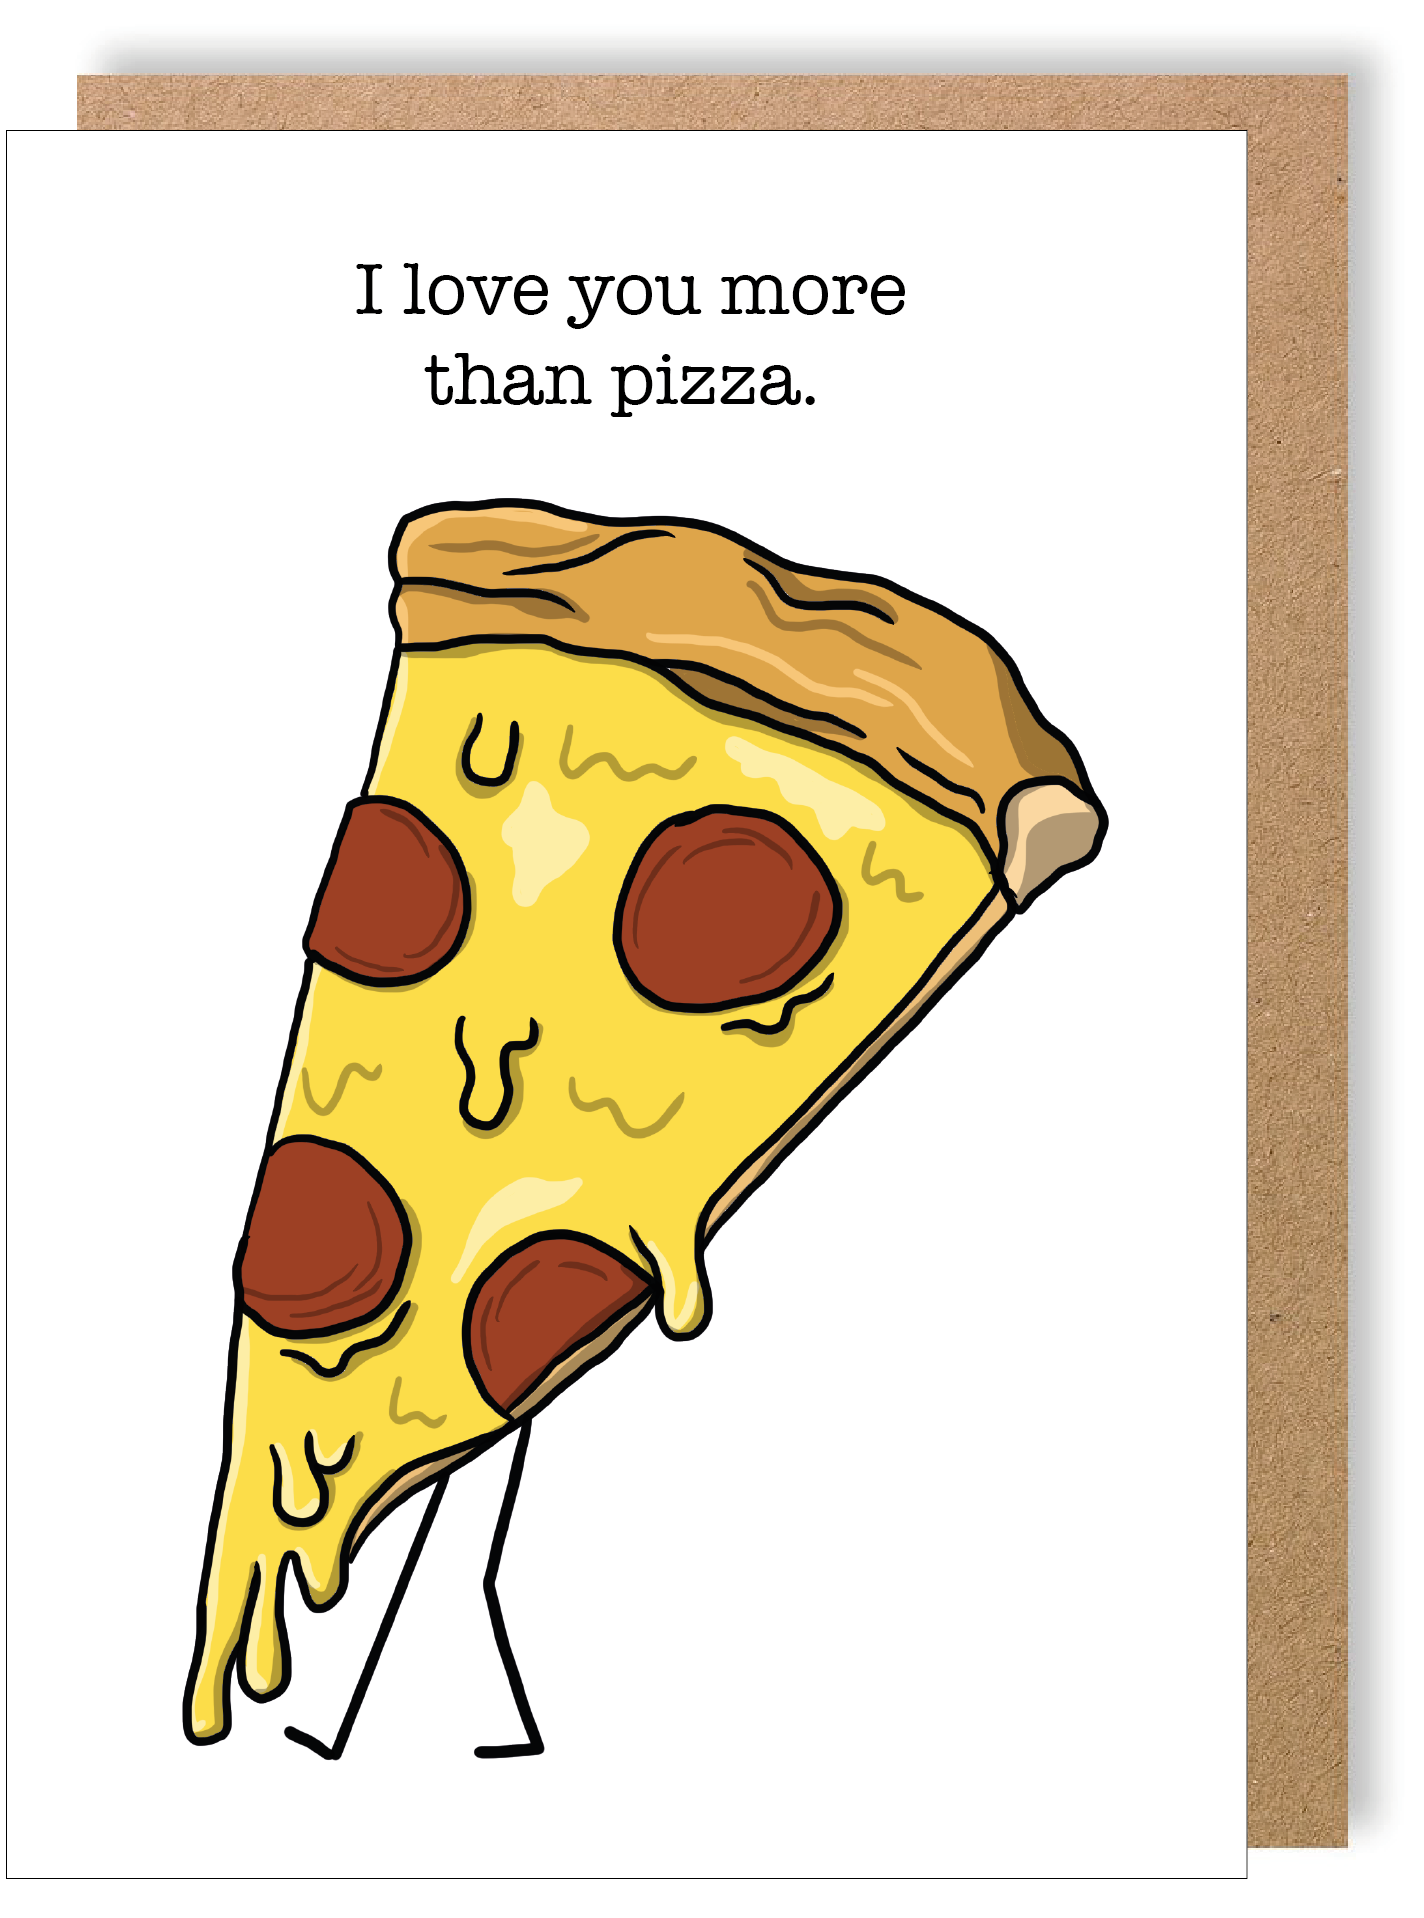 I Love You More Than Pizza - Pizza - Greetings Card - LukeHorton Art